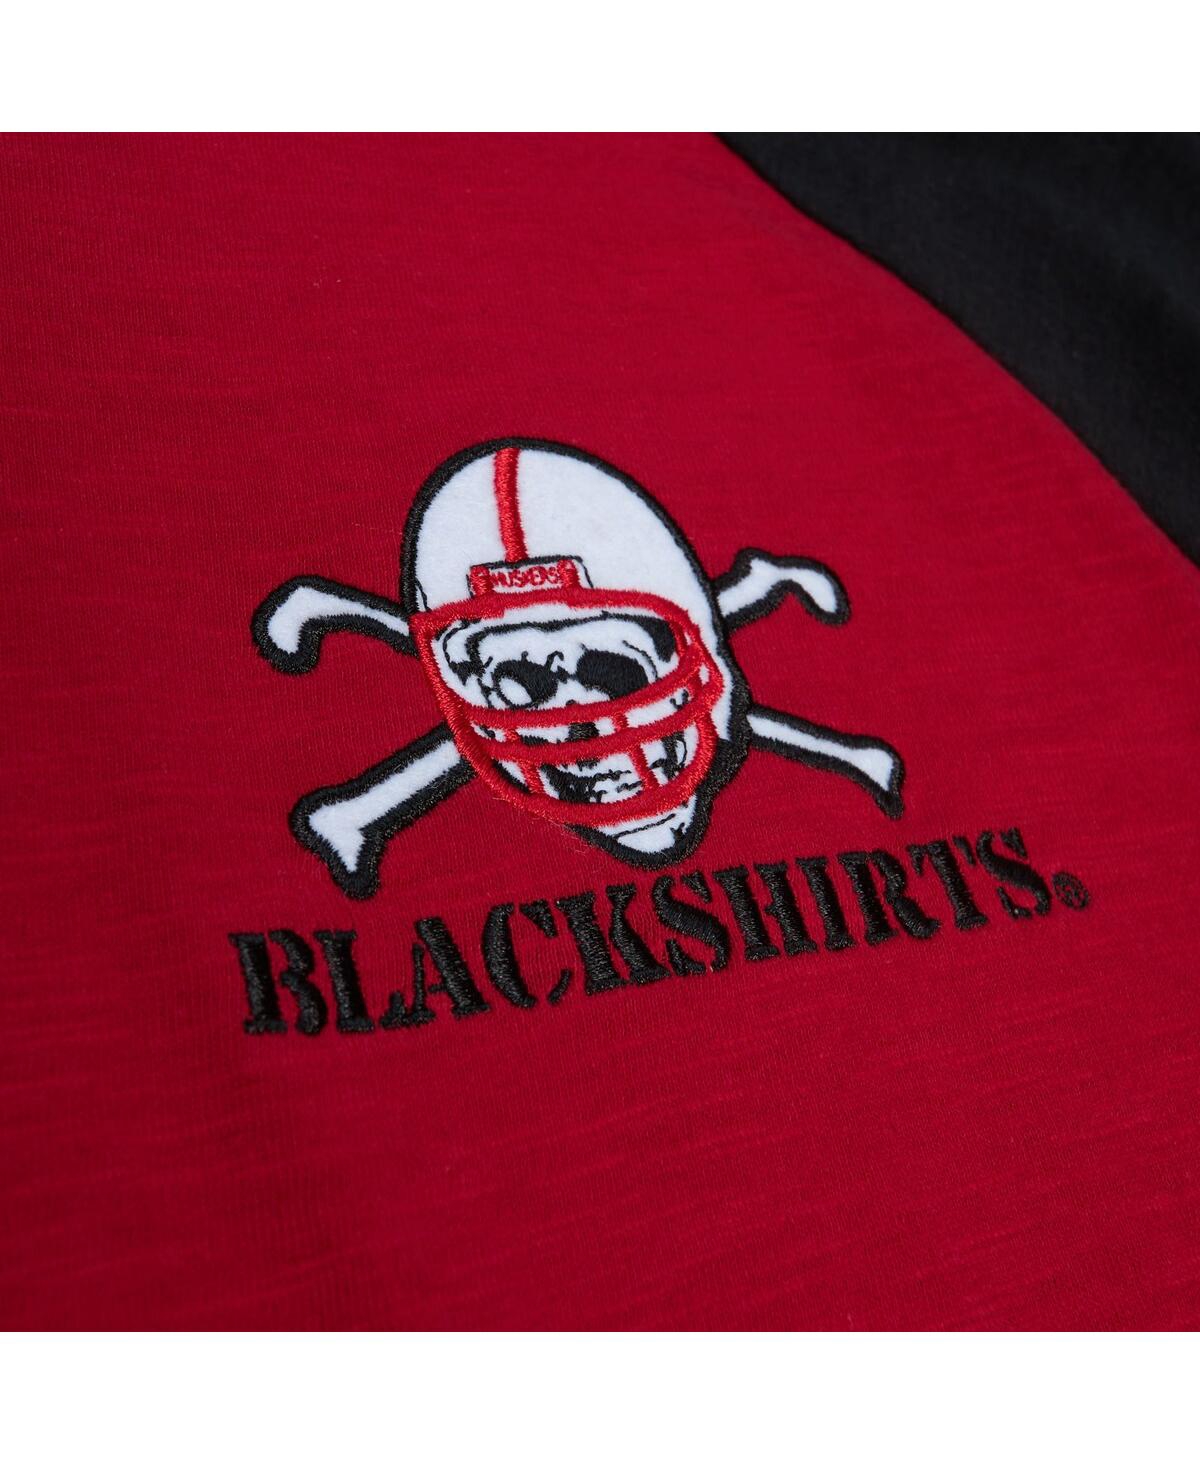 Shop Mitchell & Ness Men's  Scarlet Nebraska Huskers Legendary Slub Raglan Long Sleeve T-shirt